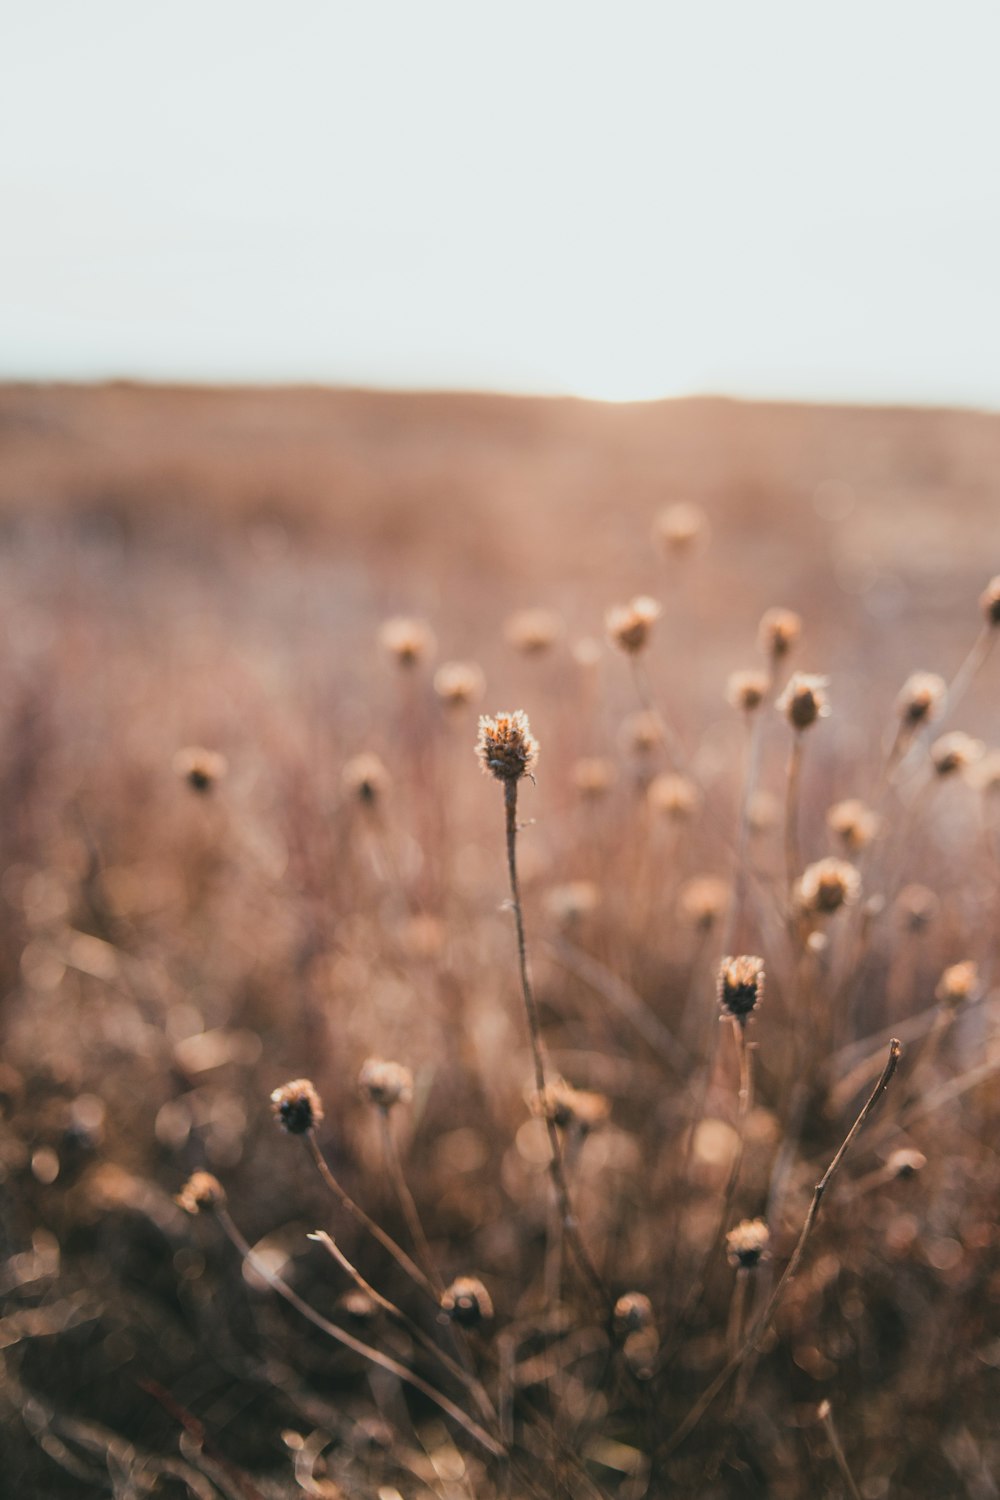 Brown flower field during daytime photo – Free Field Image on Unsplash